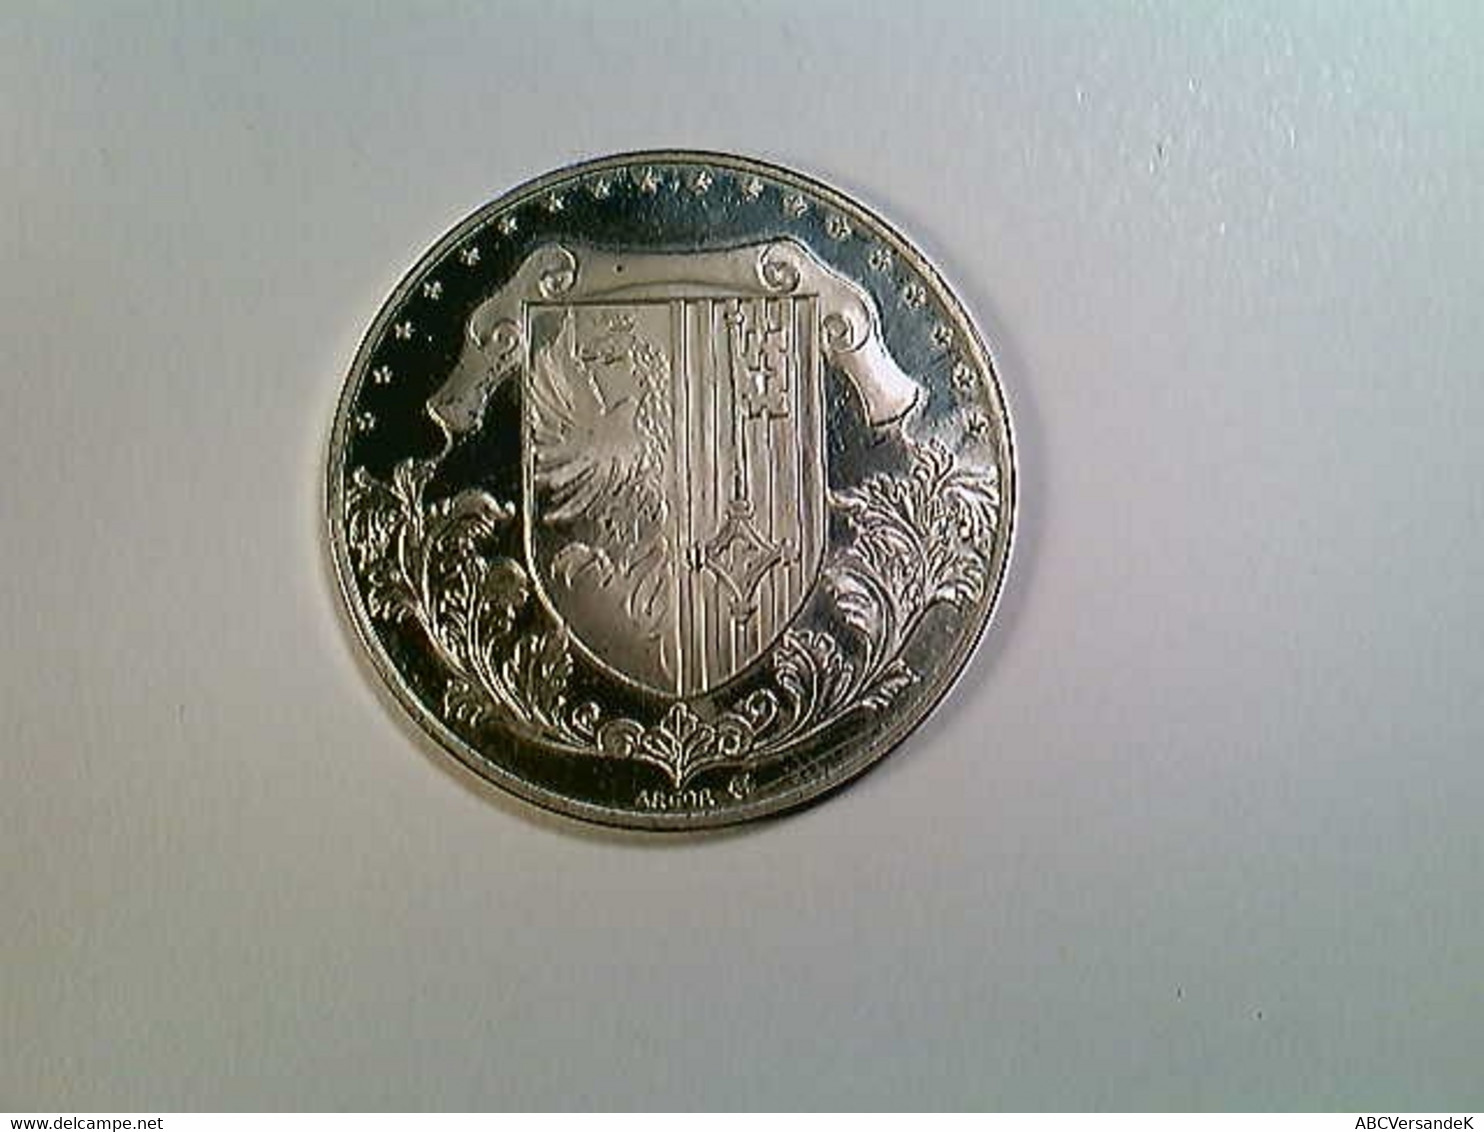 Münze Republica Geneva 1814-1964, Schweiz Kantonalmünze, Argor, Silber, SELTEN! - Numismatik